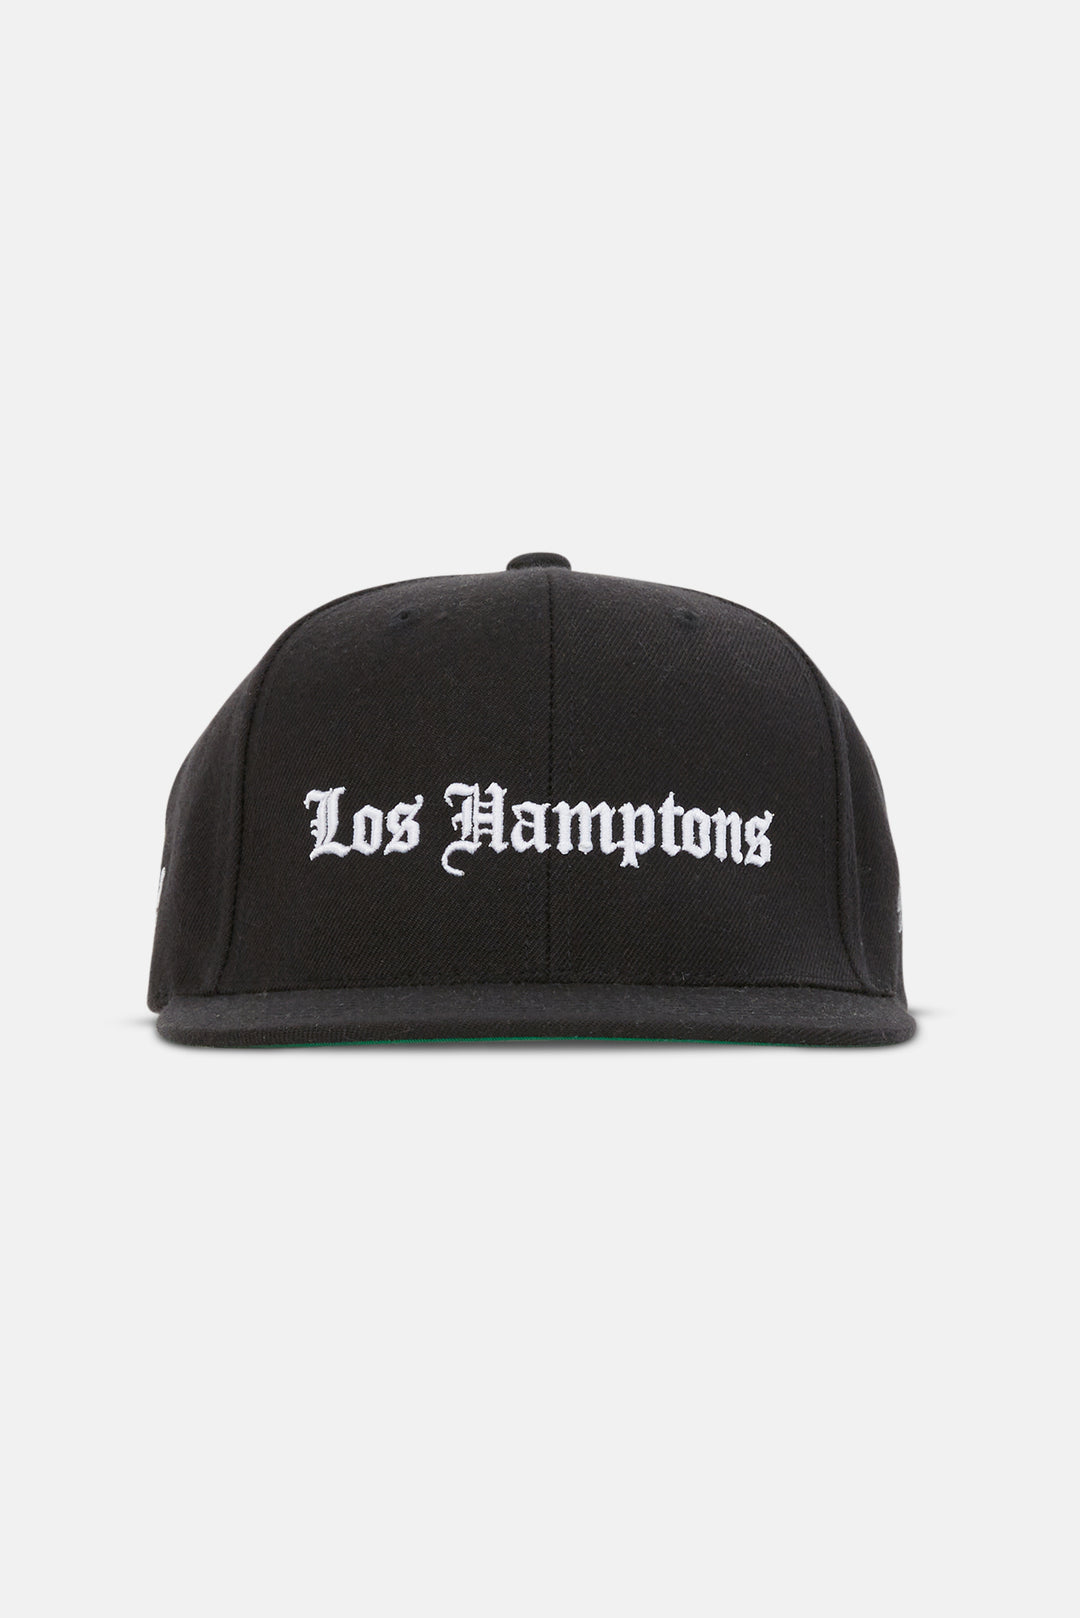 x SSUR Los Hamptons Snapback Black - blueandcream